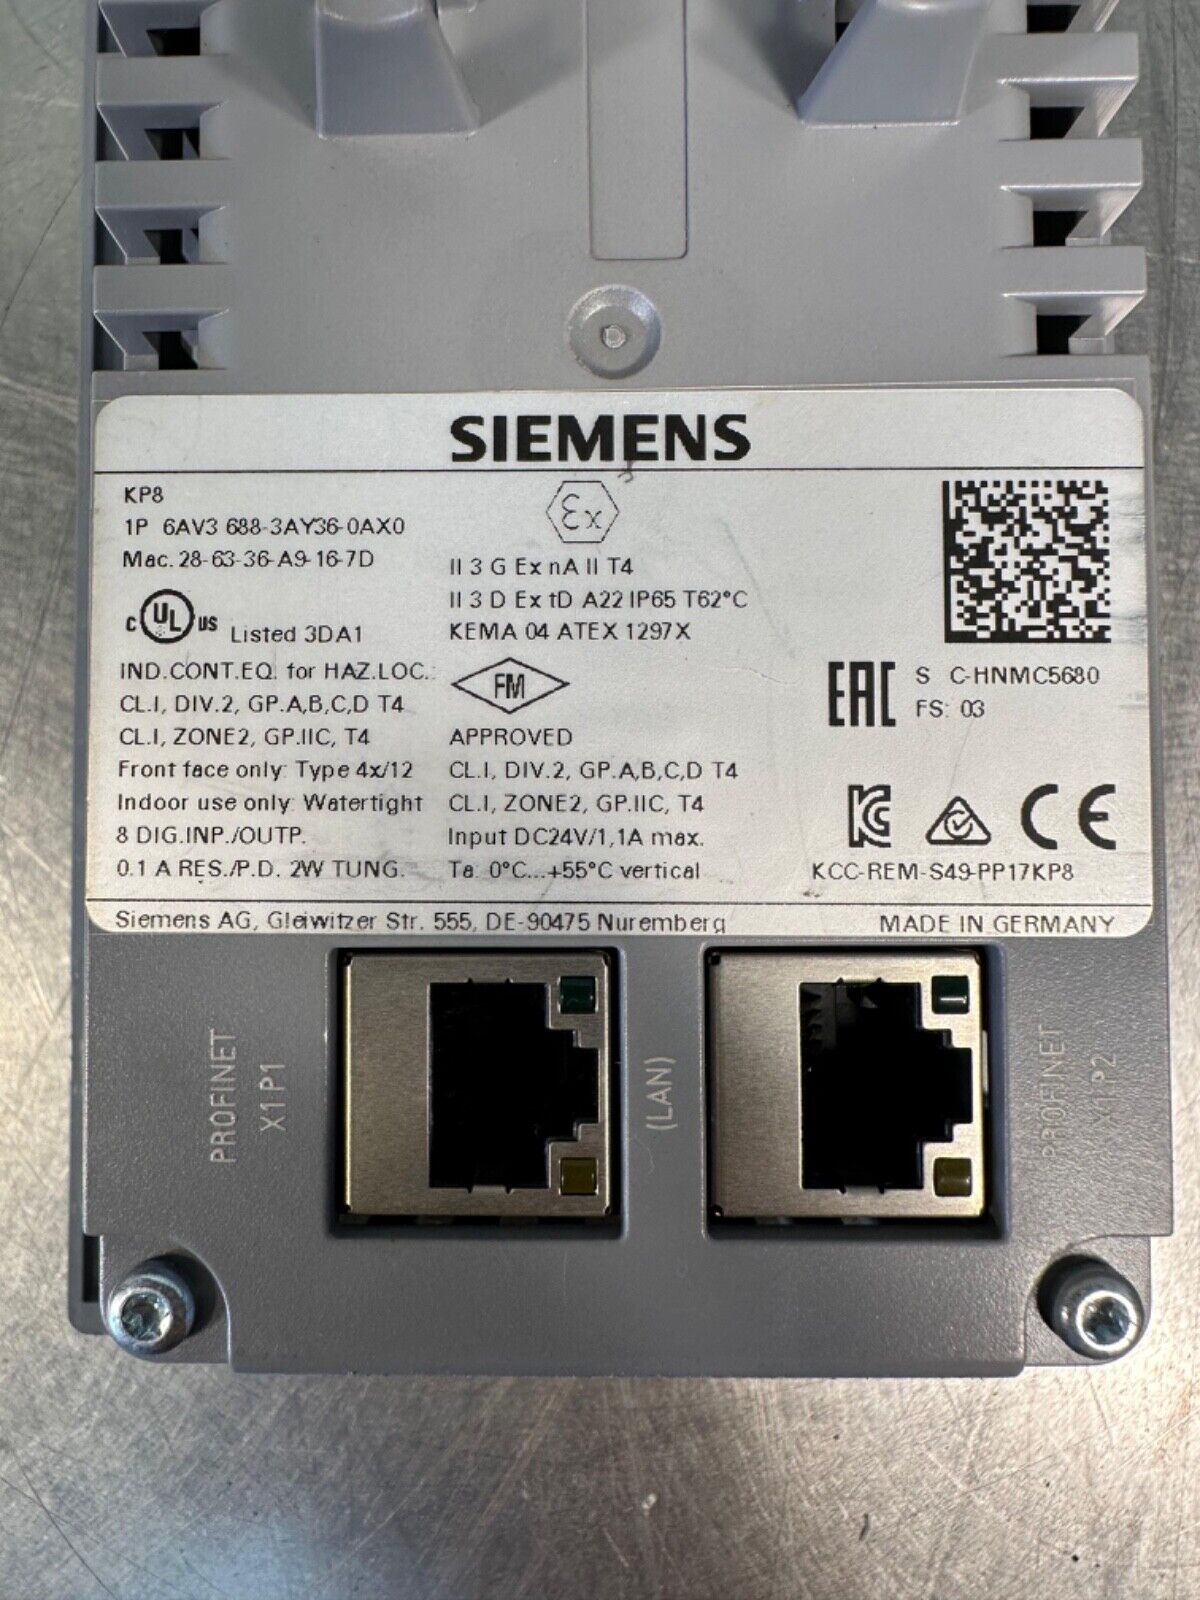 SIEMENS Simatic KP8 (6AV3 688-3AY36-0AX0) HMI 8-Button Panel. (2F-08)